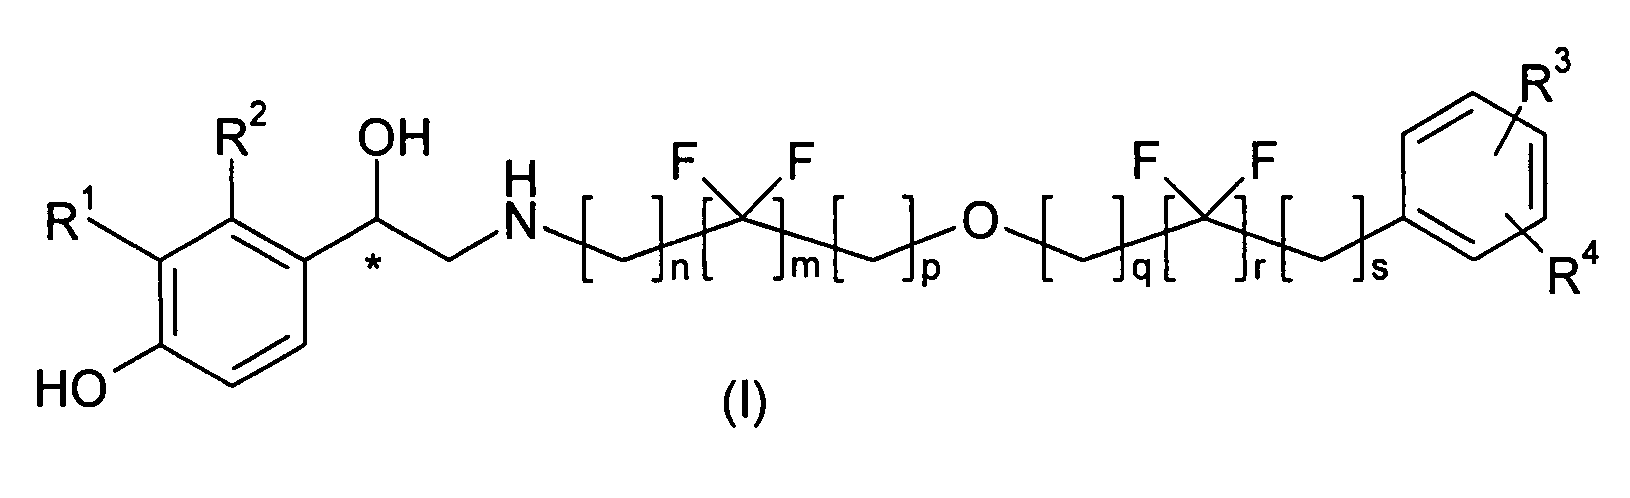 Derivatives of 4-(2-amino-1-hydroxyethyl)phenol as agonists of the β2 adrenergic receptor